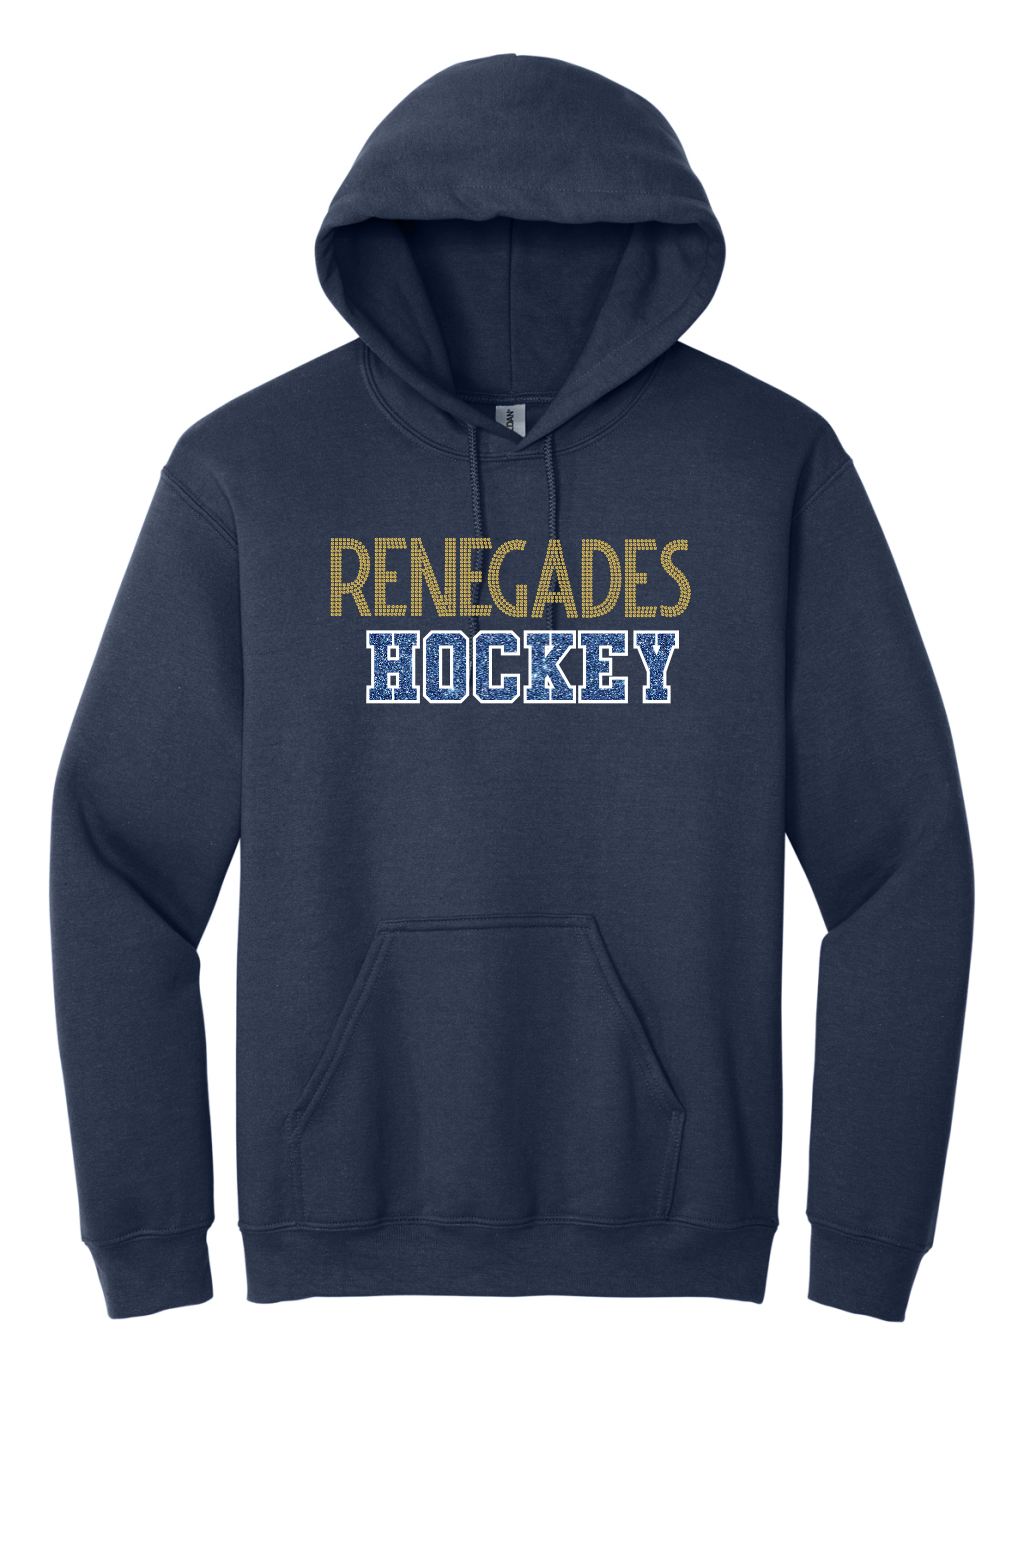 Renegades Hockey: Unisex Hoodie  With Rhinestones and Glitter